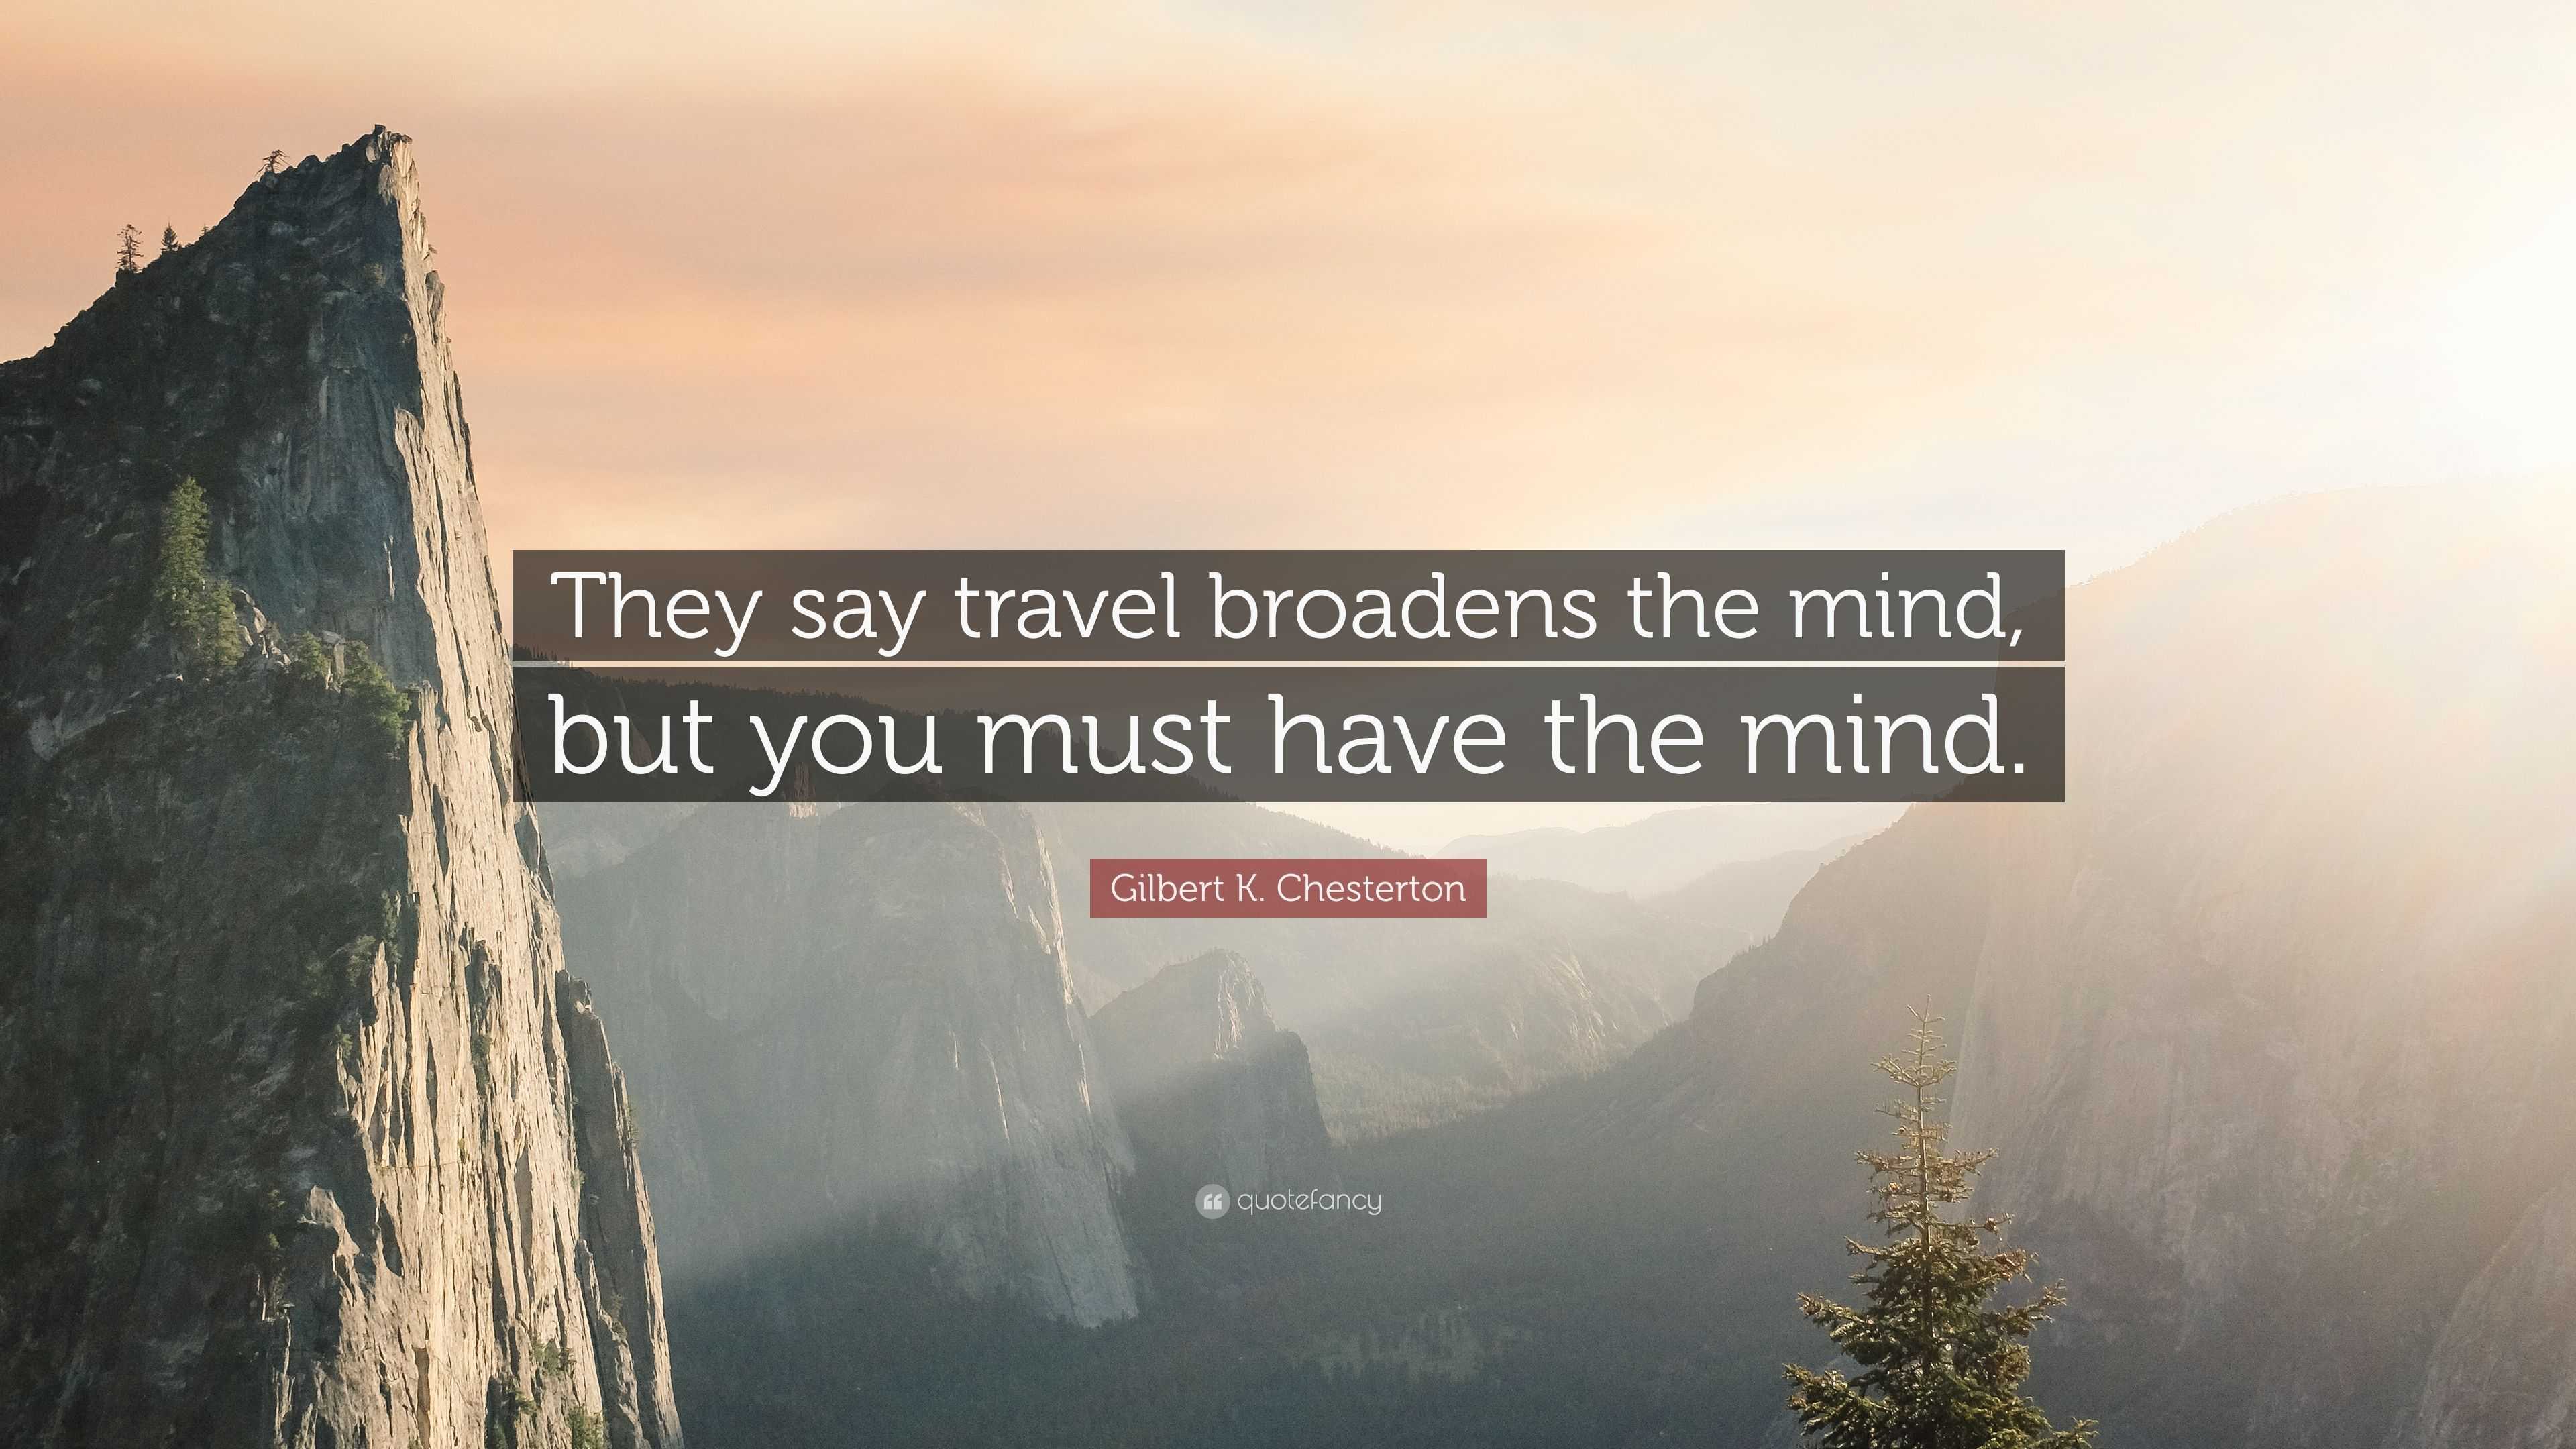 travel broadens the mind. do you agree